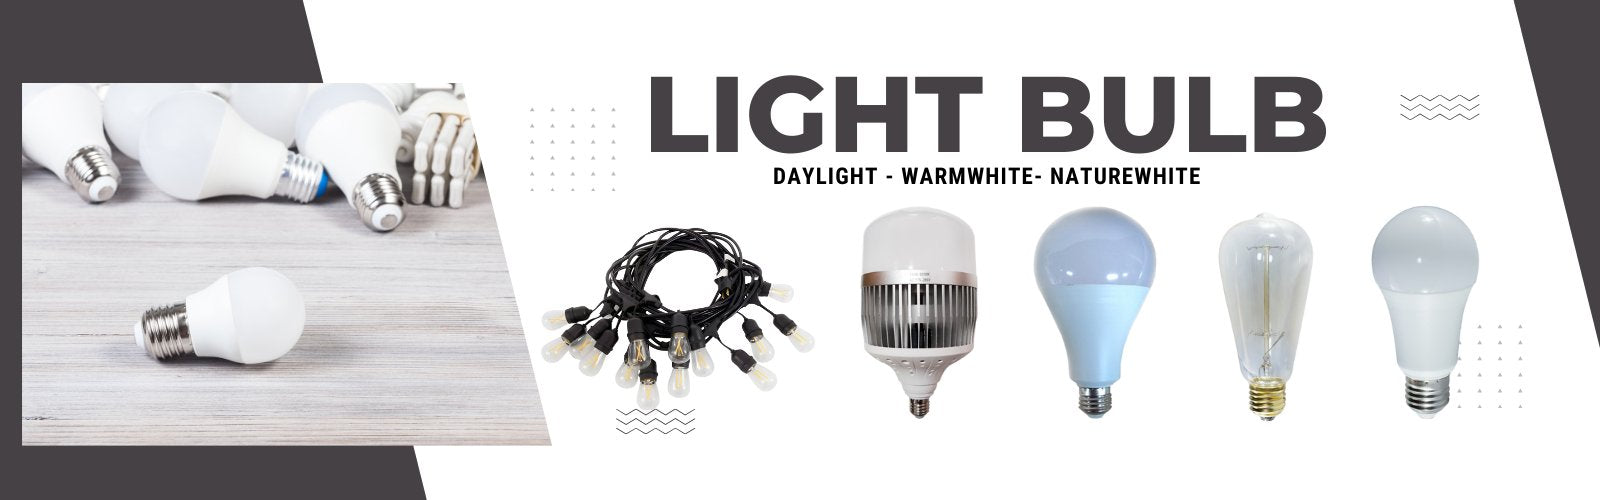 LED Light Bulbs Ecoshift Shopify